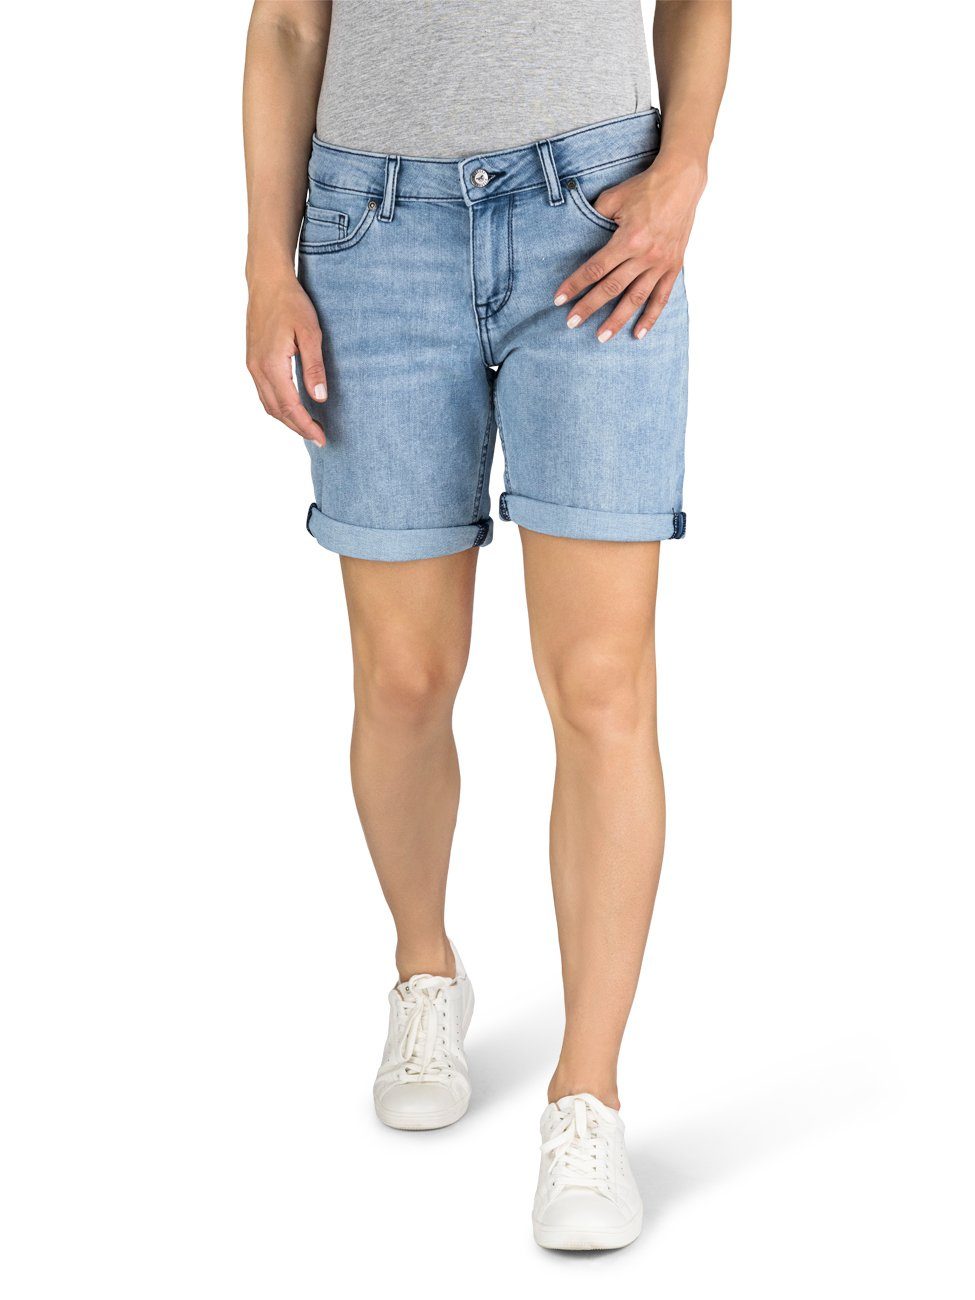 MUSTANG Jeansshorts Damen Shorts mit Hotpants Stretch Basic Fit Regular Bermuda